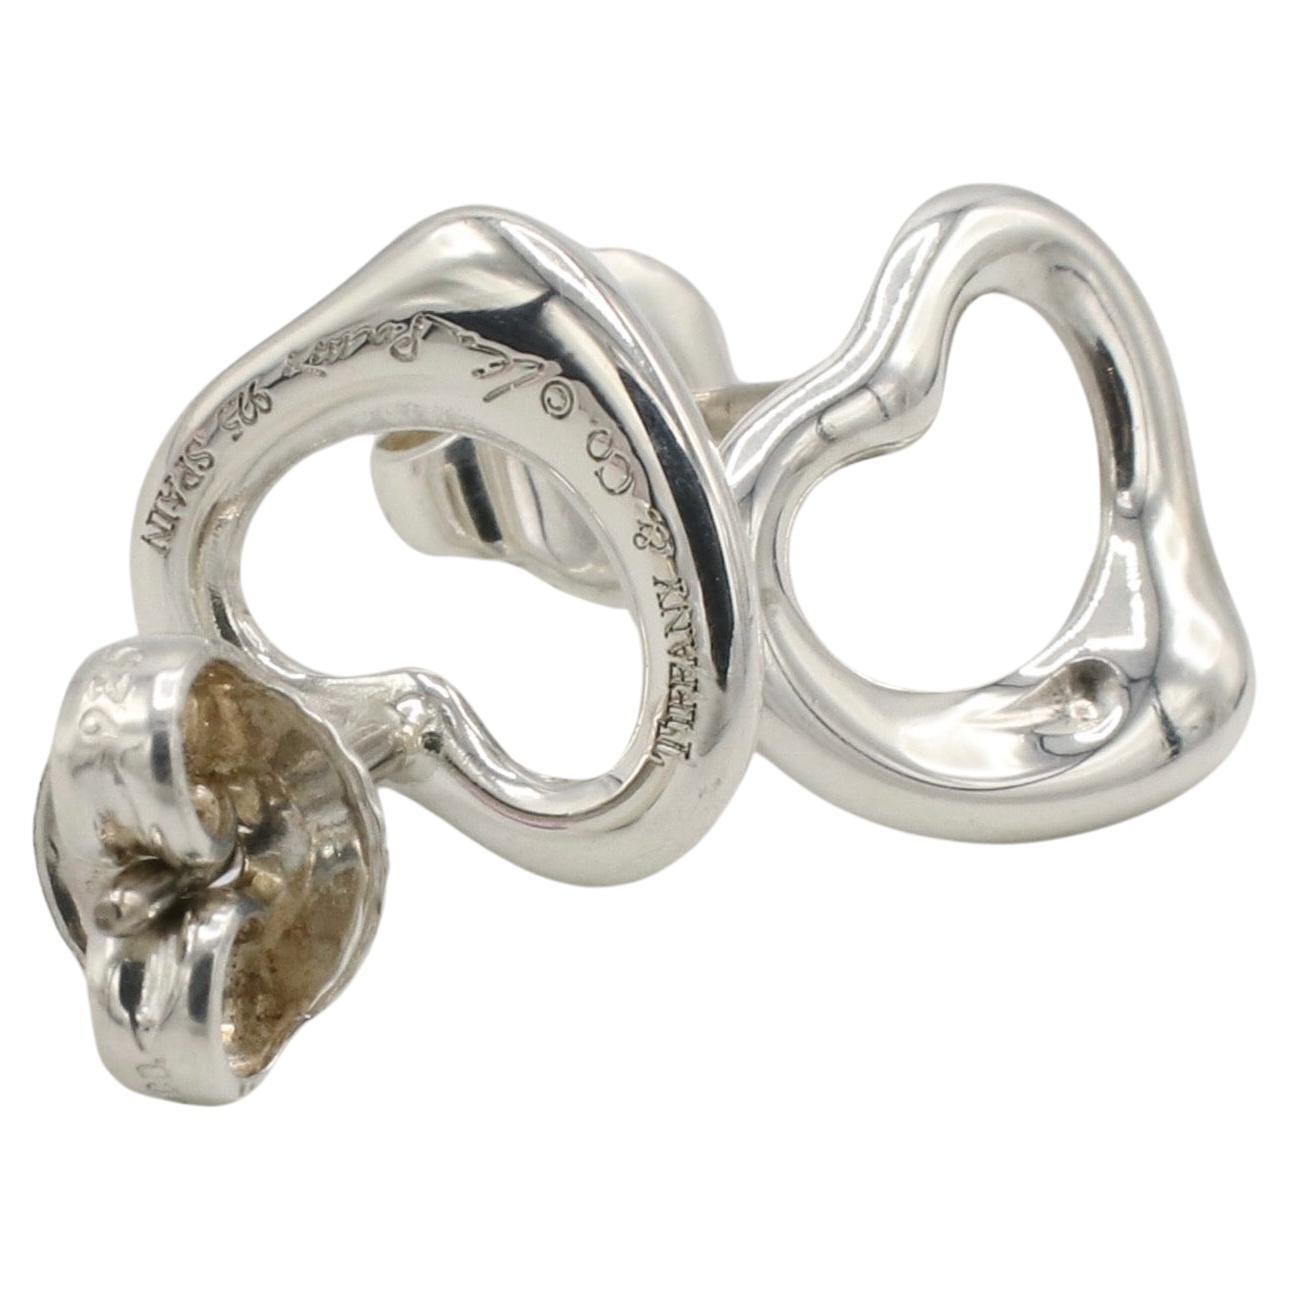 Tiffany & Co. Elsa Peretti Sterling Silver Open Heart Stud Earrings 
Metal: Sterling silver
Weight: 1.09 grams
Dimensions: 10 x 11mm 
Signed: Tiffany & Co. © Elsa Peretti 925 SPAIN 
Retail: $410